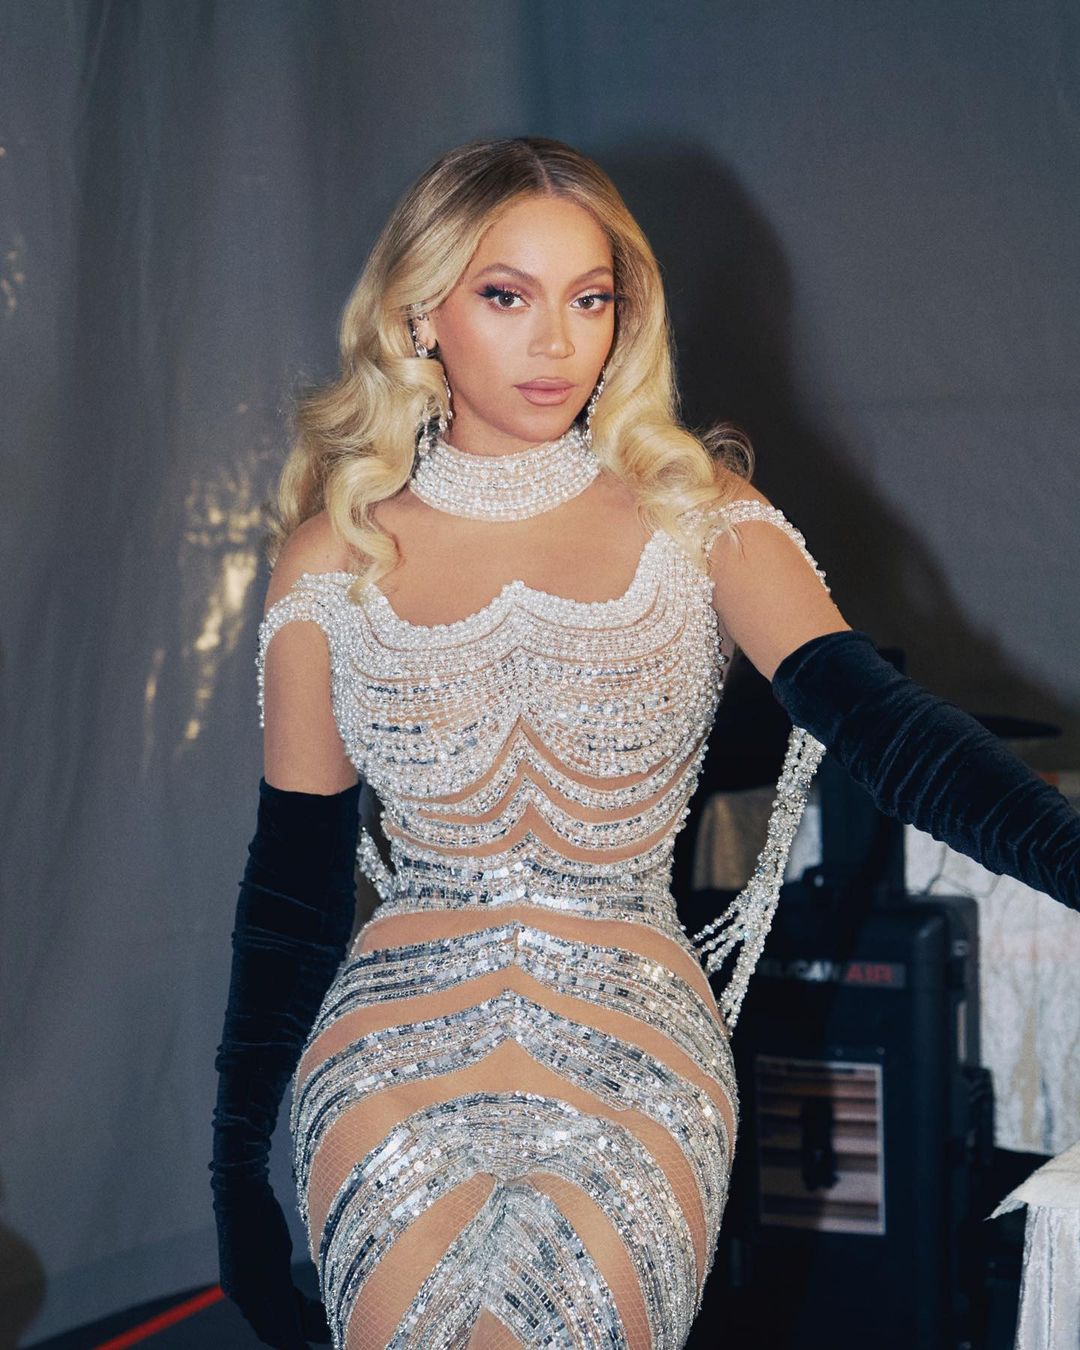 Beyoncé rocks platinum blond hair, metallic gown at 'Renaissance